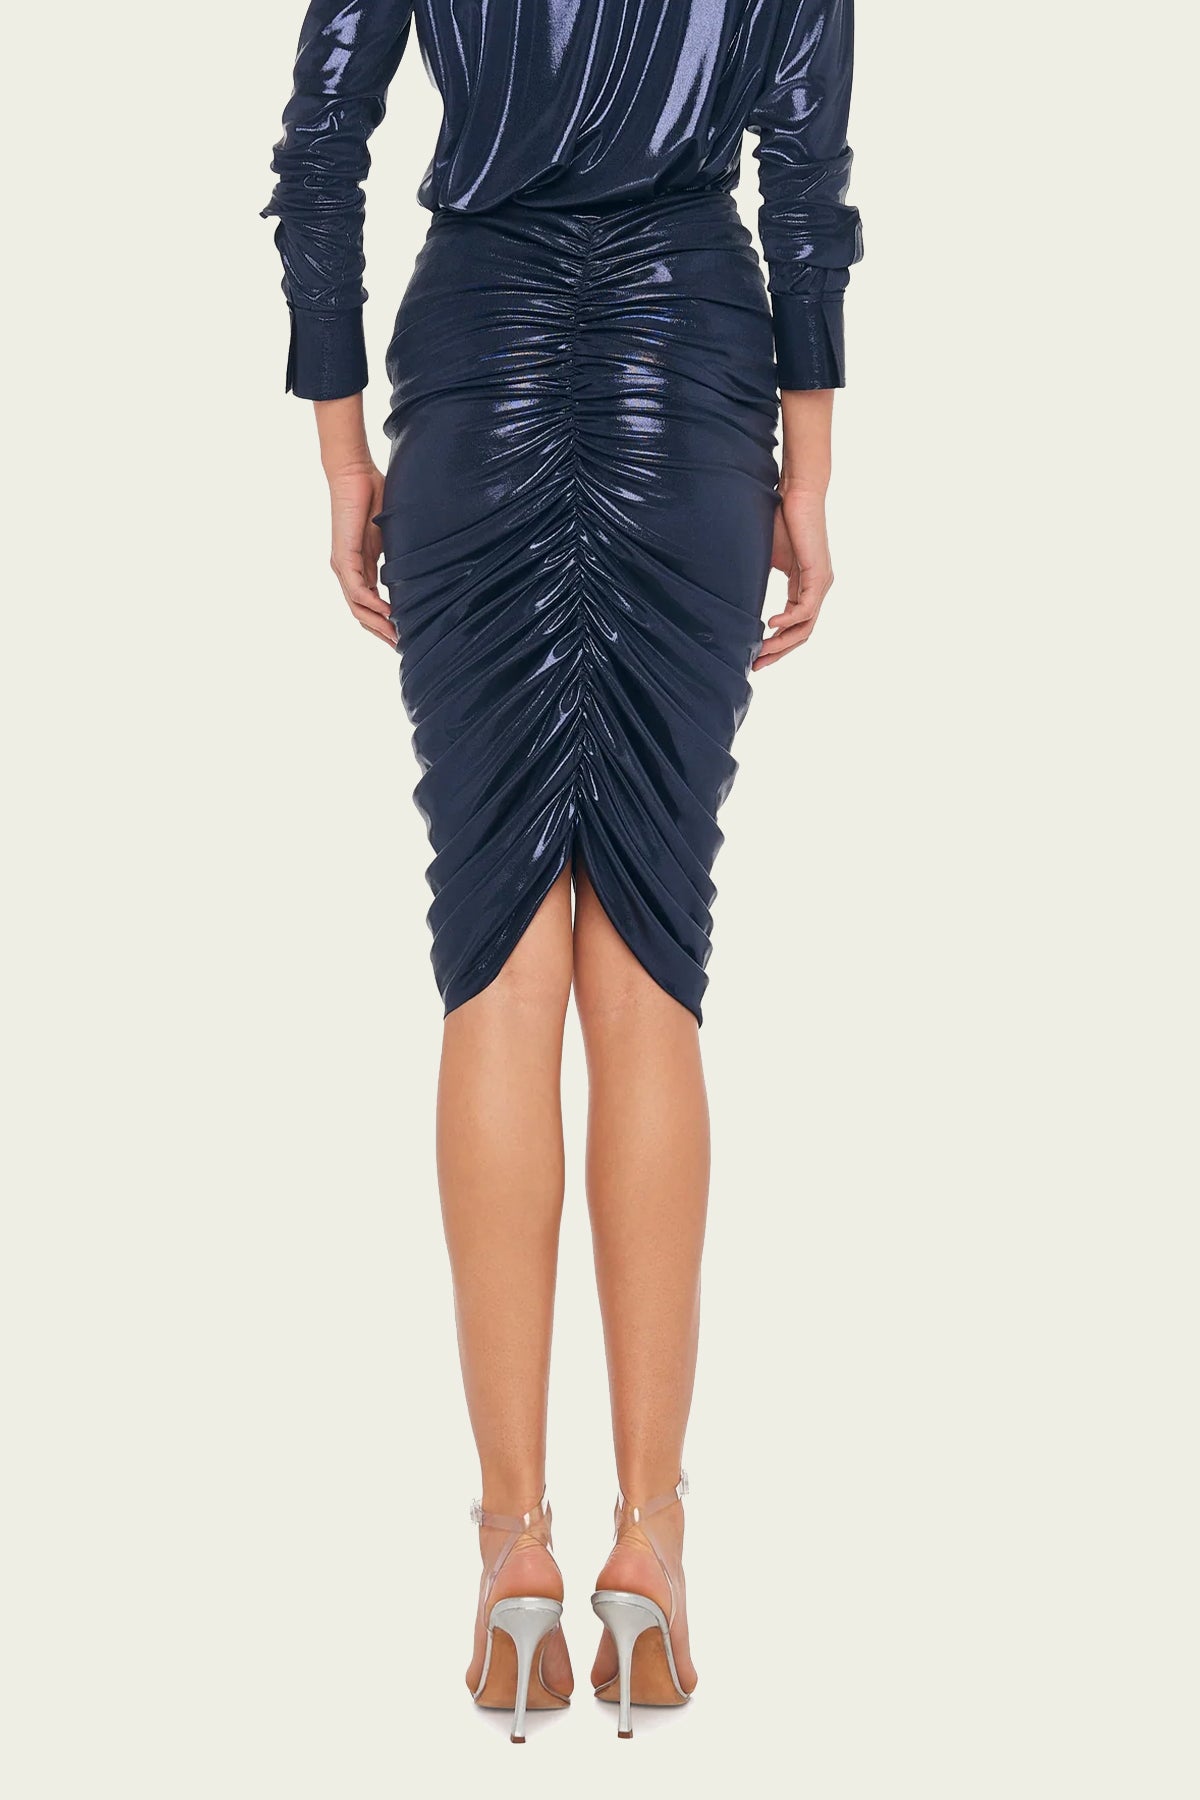 Shirred Skirt to Knee in True Navy - shop-olivia.com